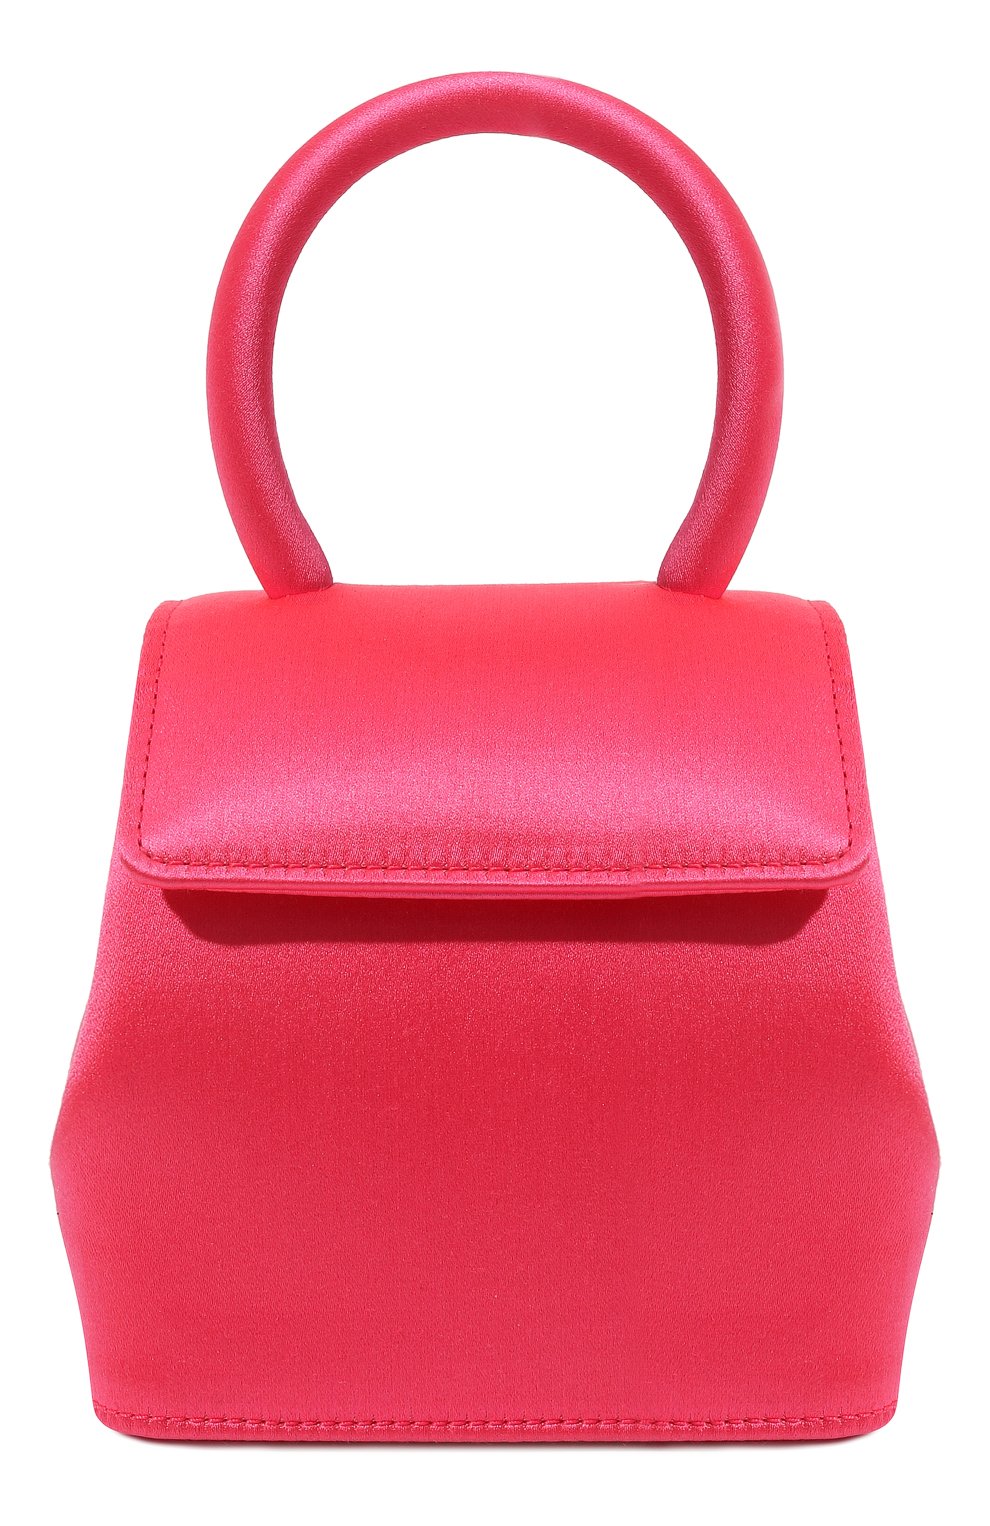 Фото Женская розовая сумка liza mini RUBEUS MILANO, арт. 014/18DML354 Италия 014/18DML354 